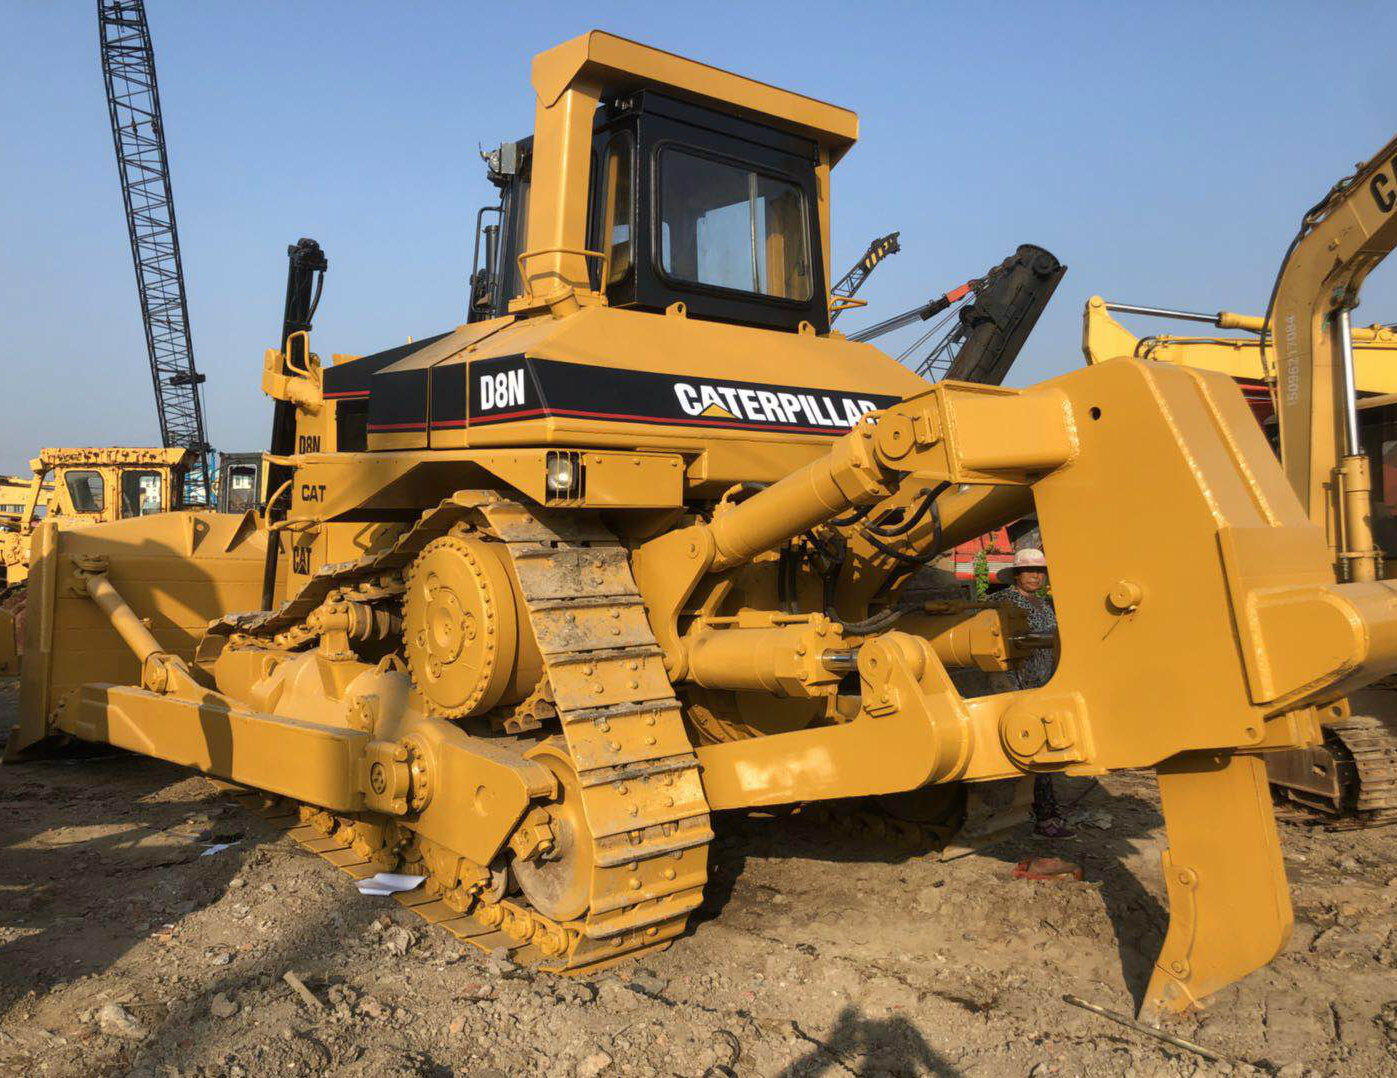 
                Usado Cat D8n bulldozer, Bulldozer Caterpillar D8n
            